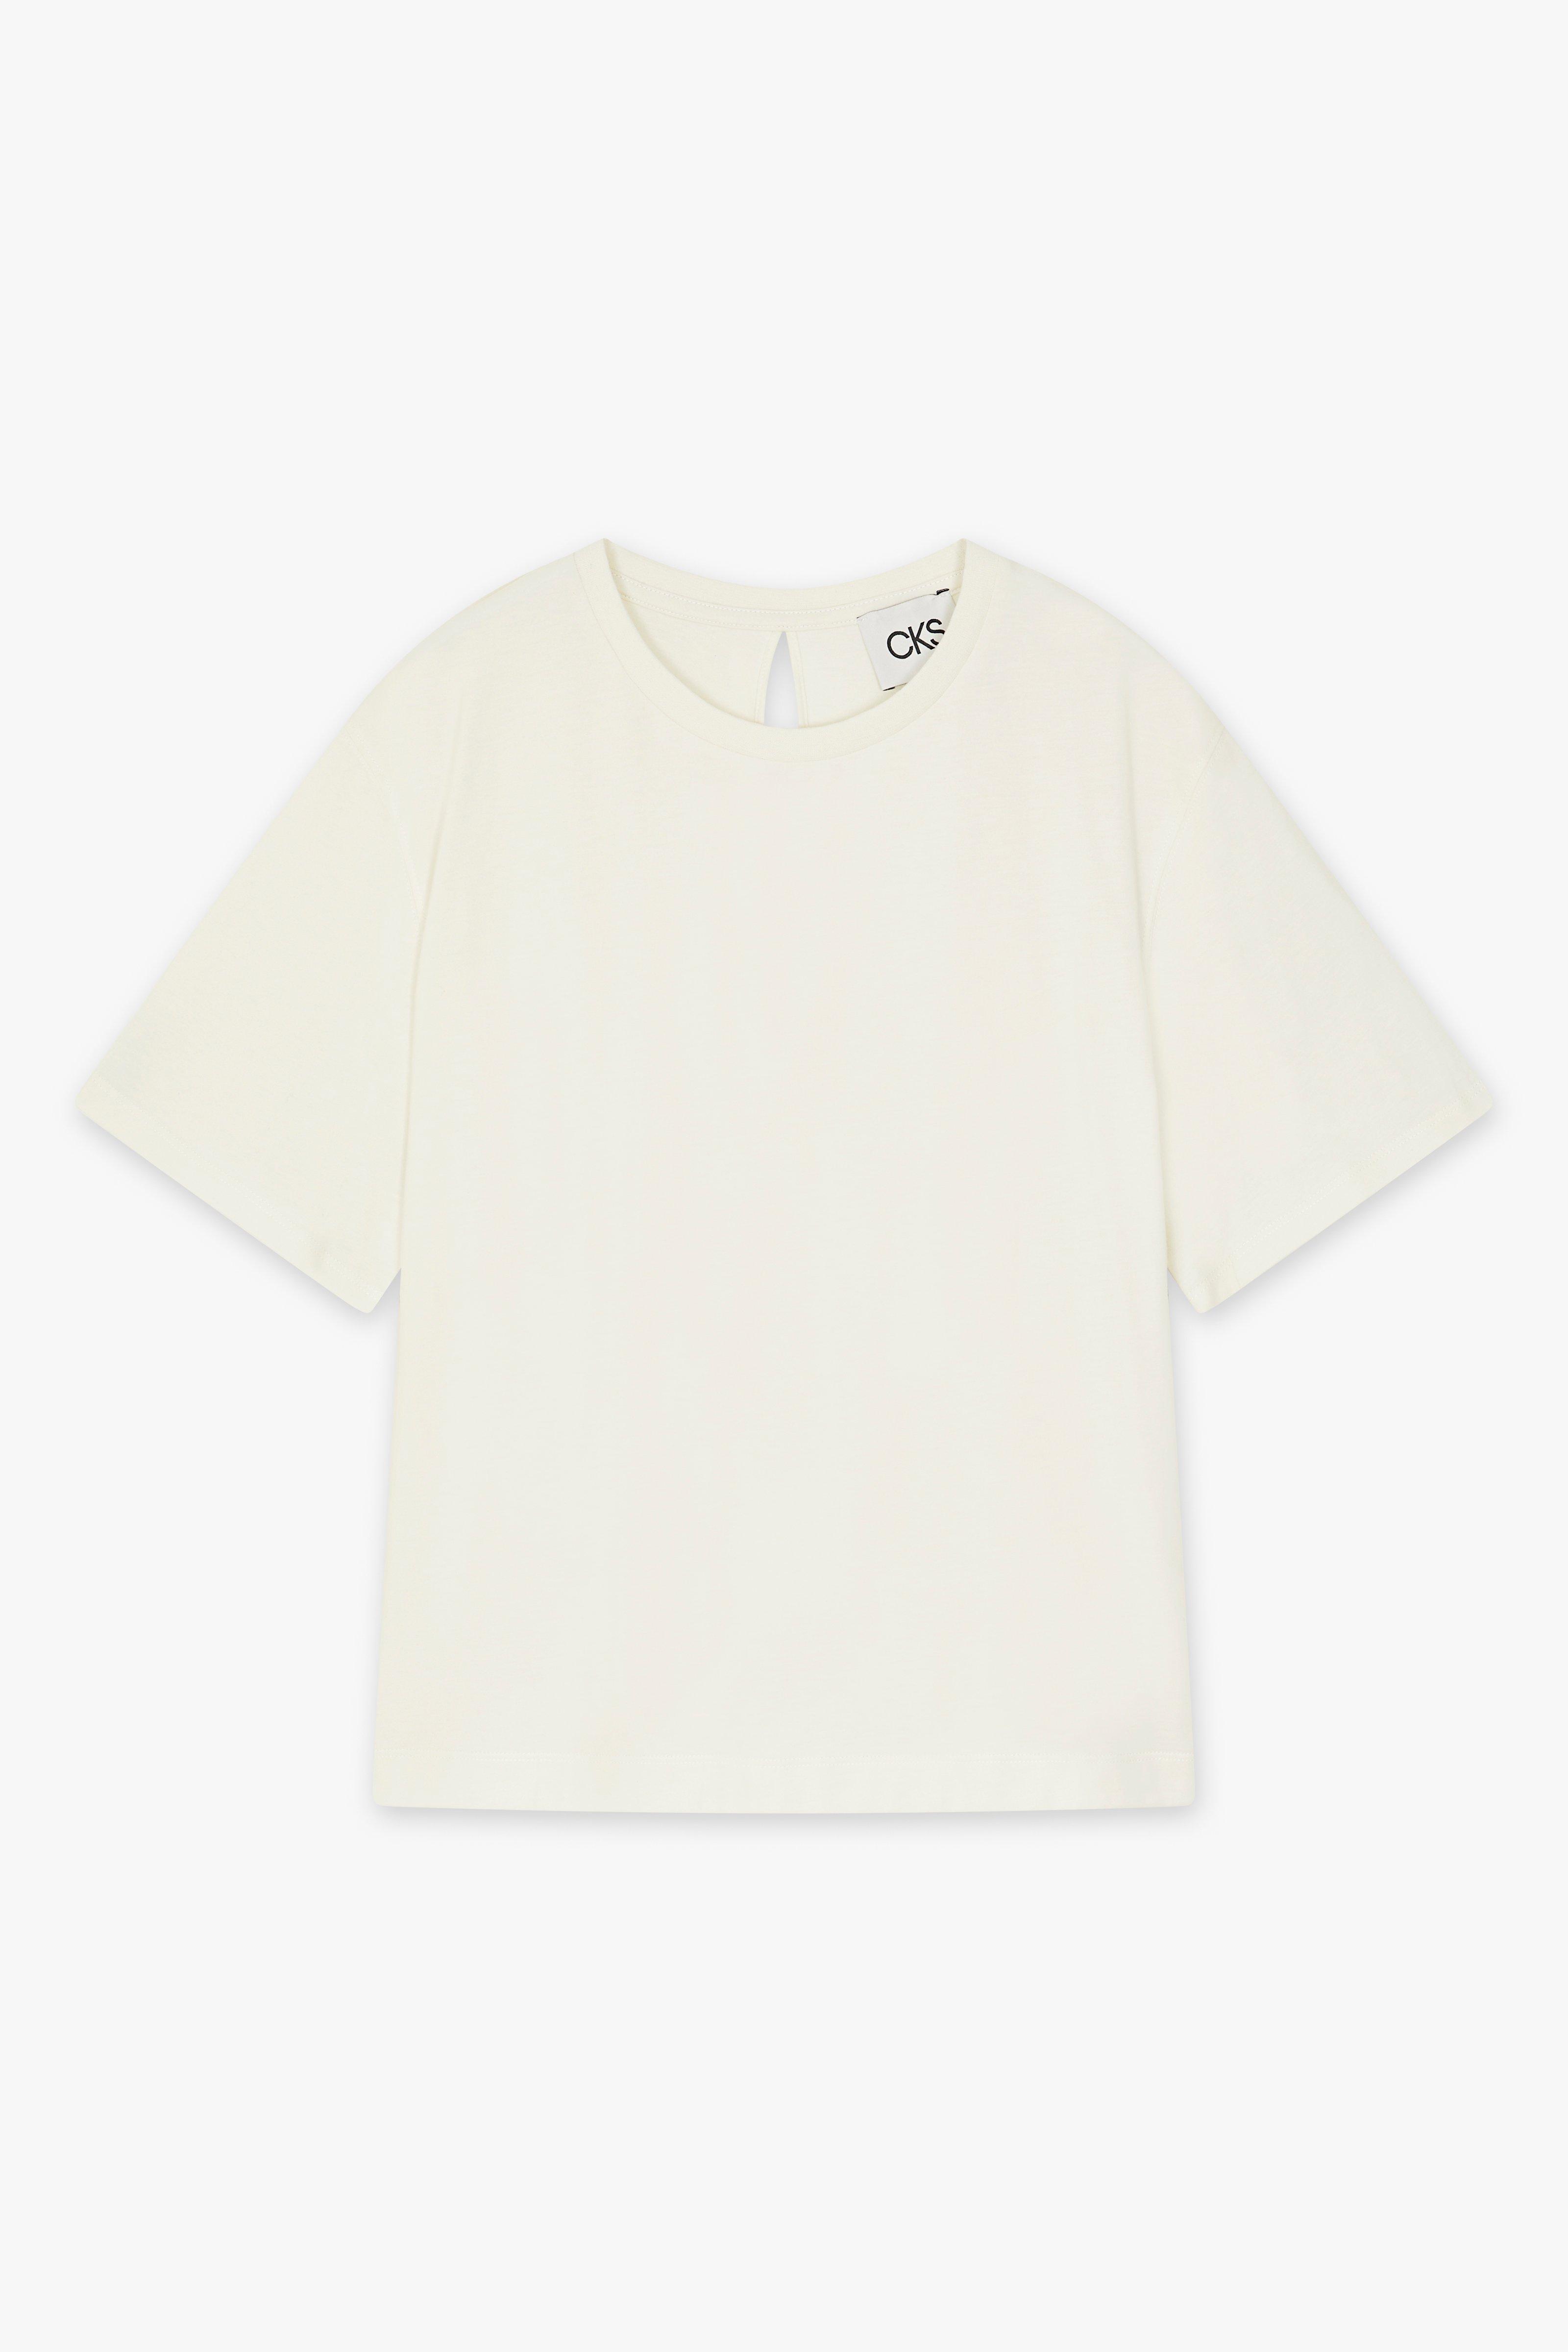 CKS Dames - TURN - T-Shirt Kurzarm - Weiß